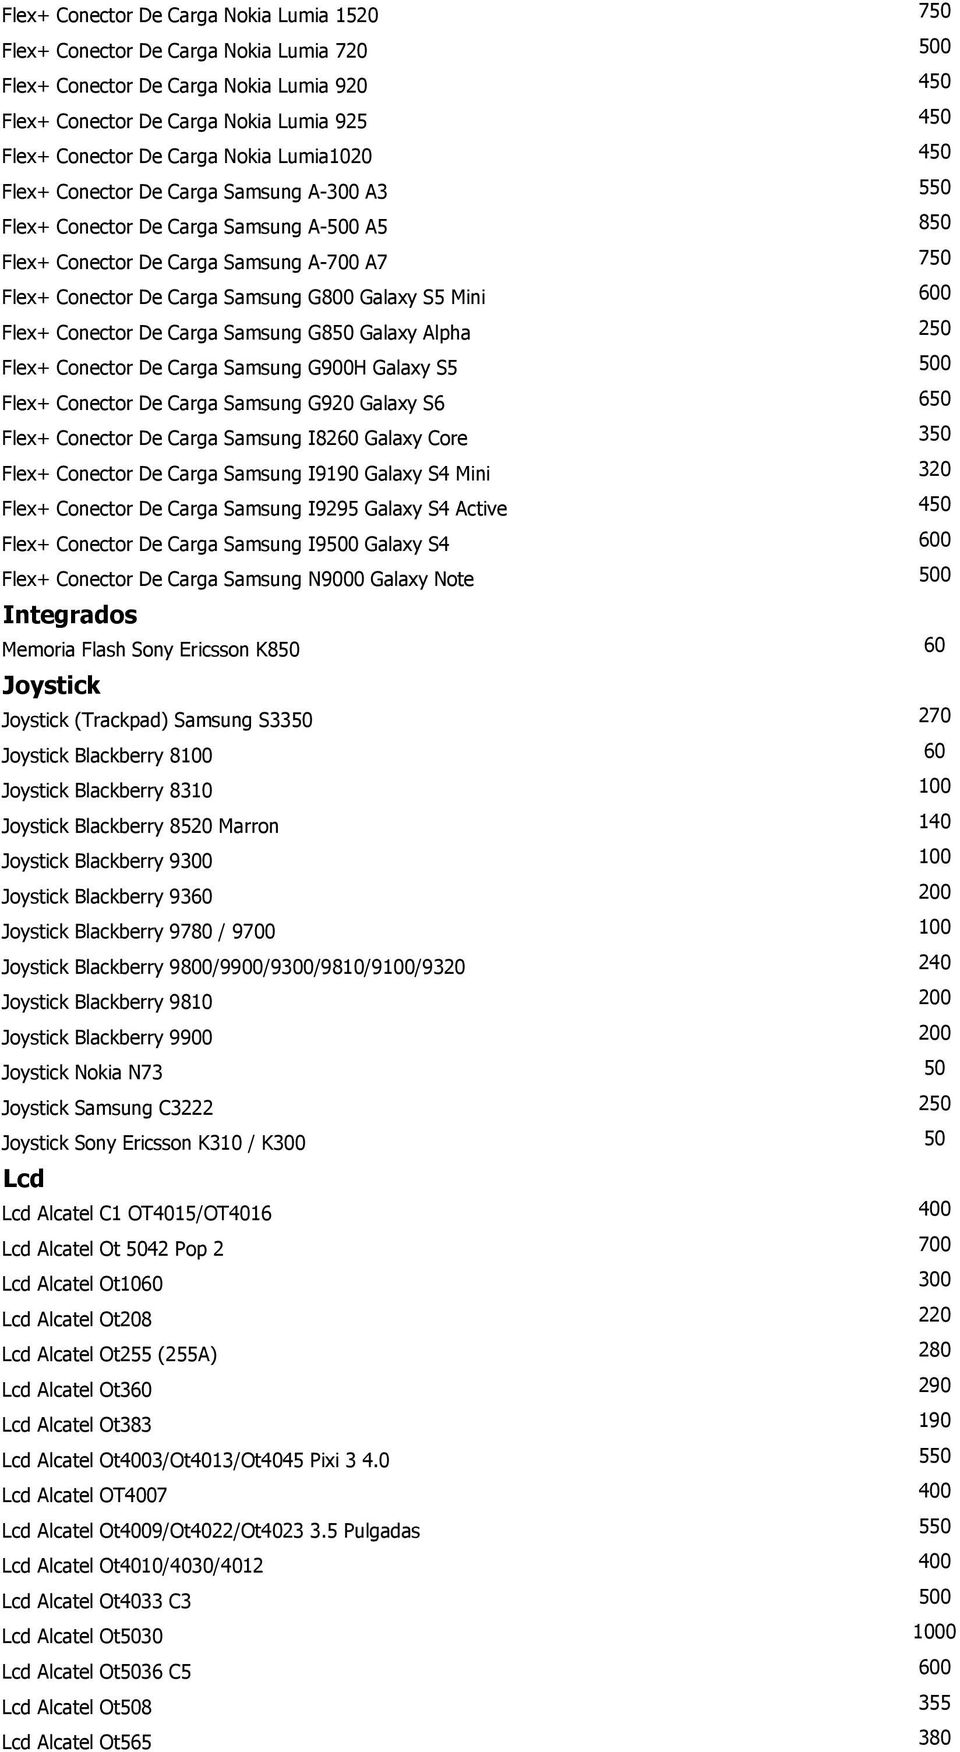 Galaxy S5 Mini 600 Flex+ Conector De Carga Samsung G850 Galaxy Alpha 250 Flex+ Conector De Carga Samsung G900H Galaxy S5 500 Flex+ Conector De Carga Samsung G920 Galaxy S6 650 Flex+ Conector De Carga